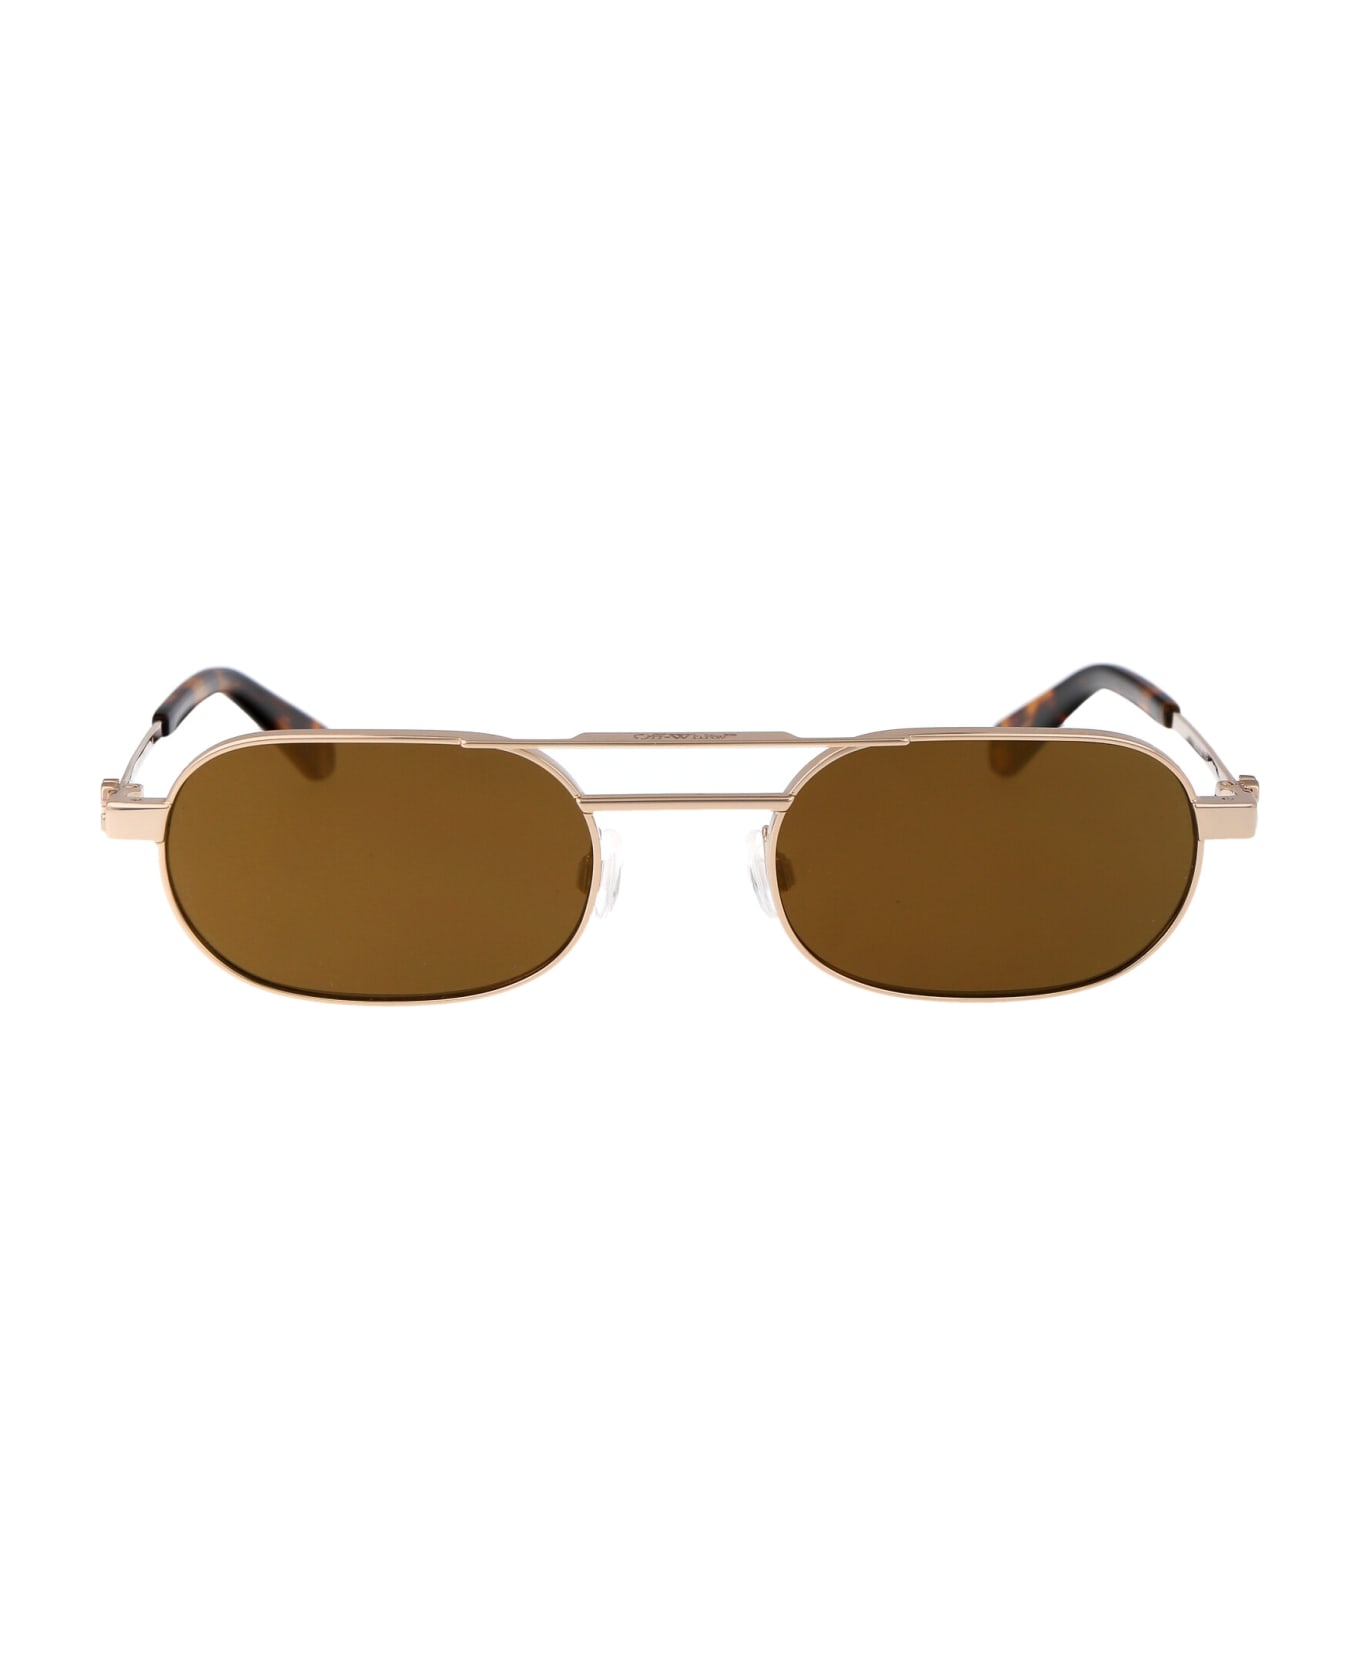 Off-White Vaiden Sunglasses - 7676 GOLD GOLD